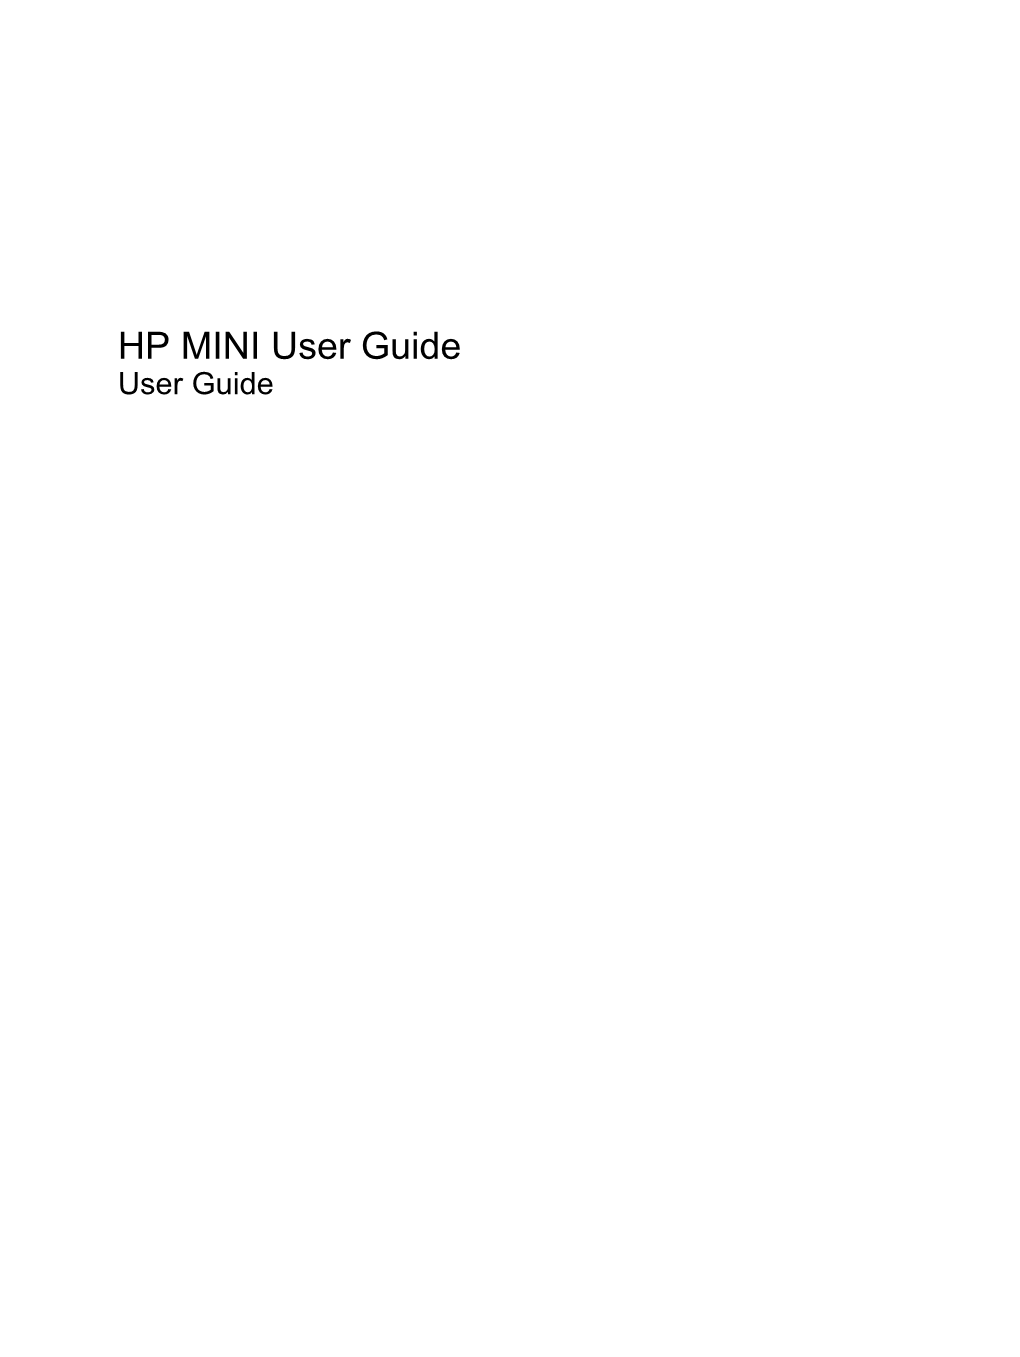 HP MINI User Guide User Guide © Copyright 2009 Hewlett-Packard Product Notice Development Company, L.P